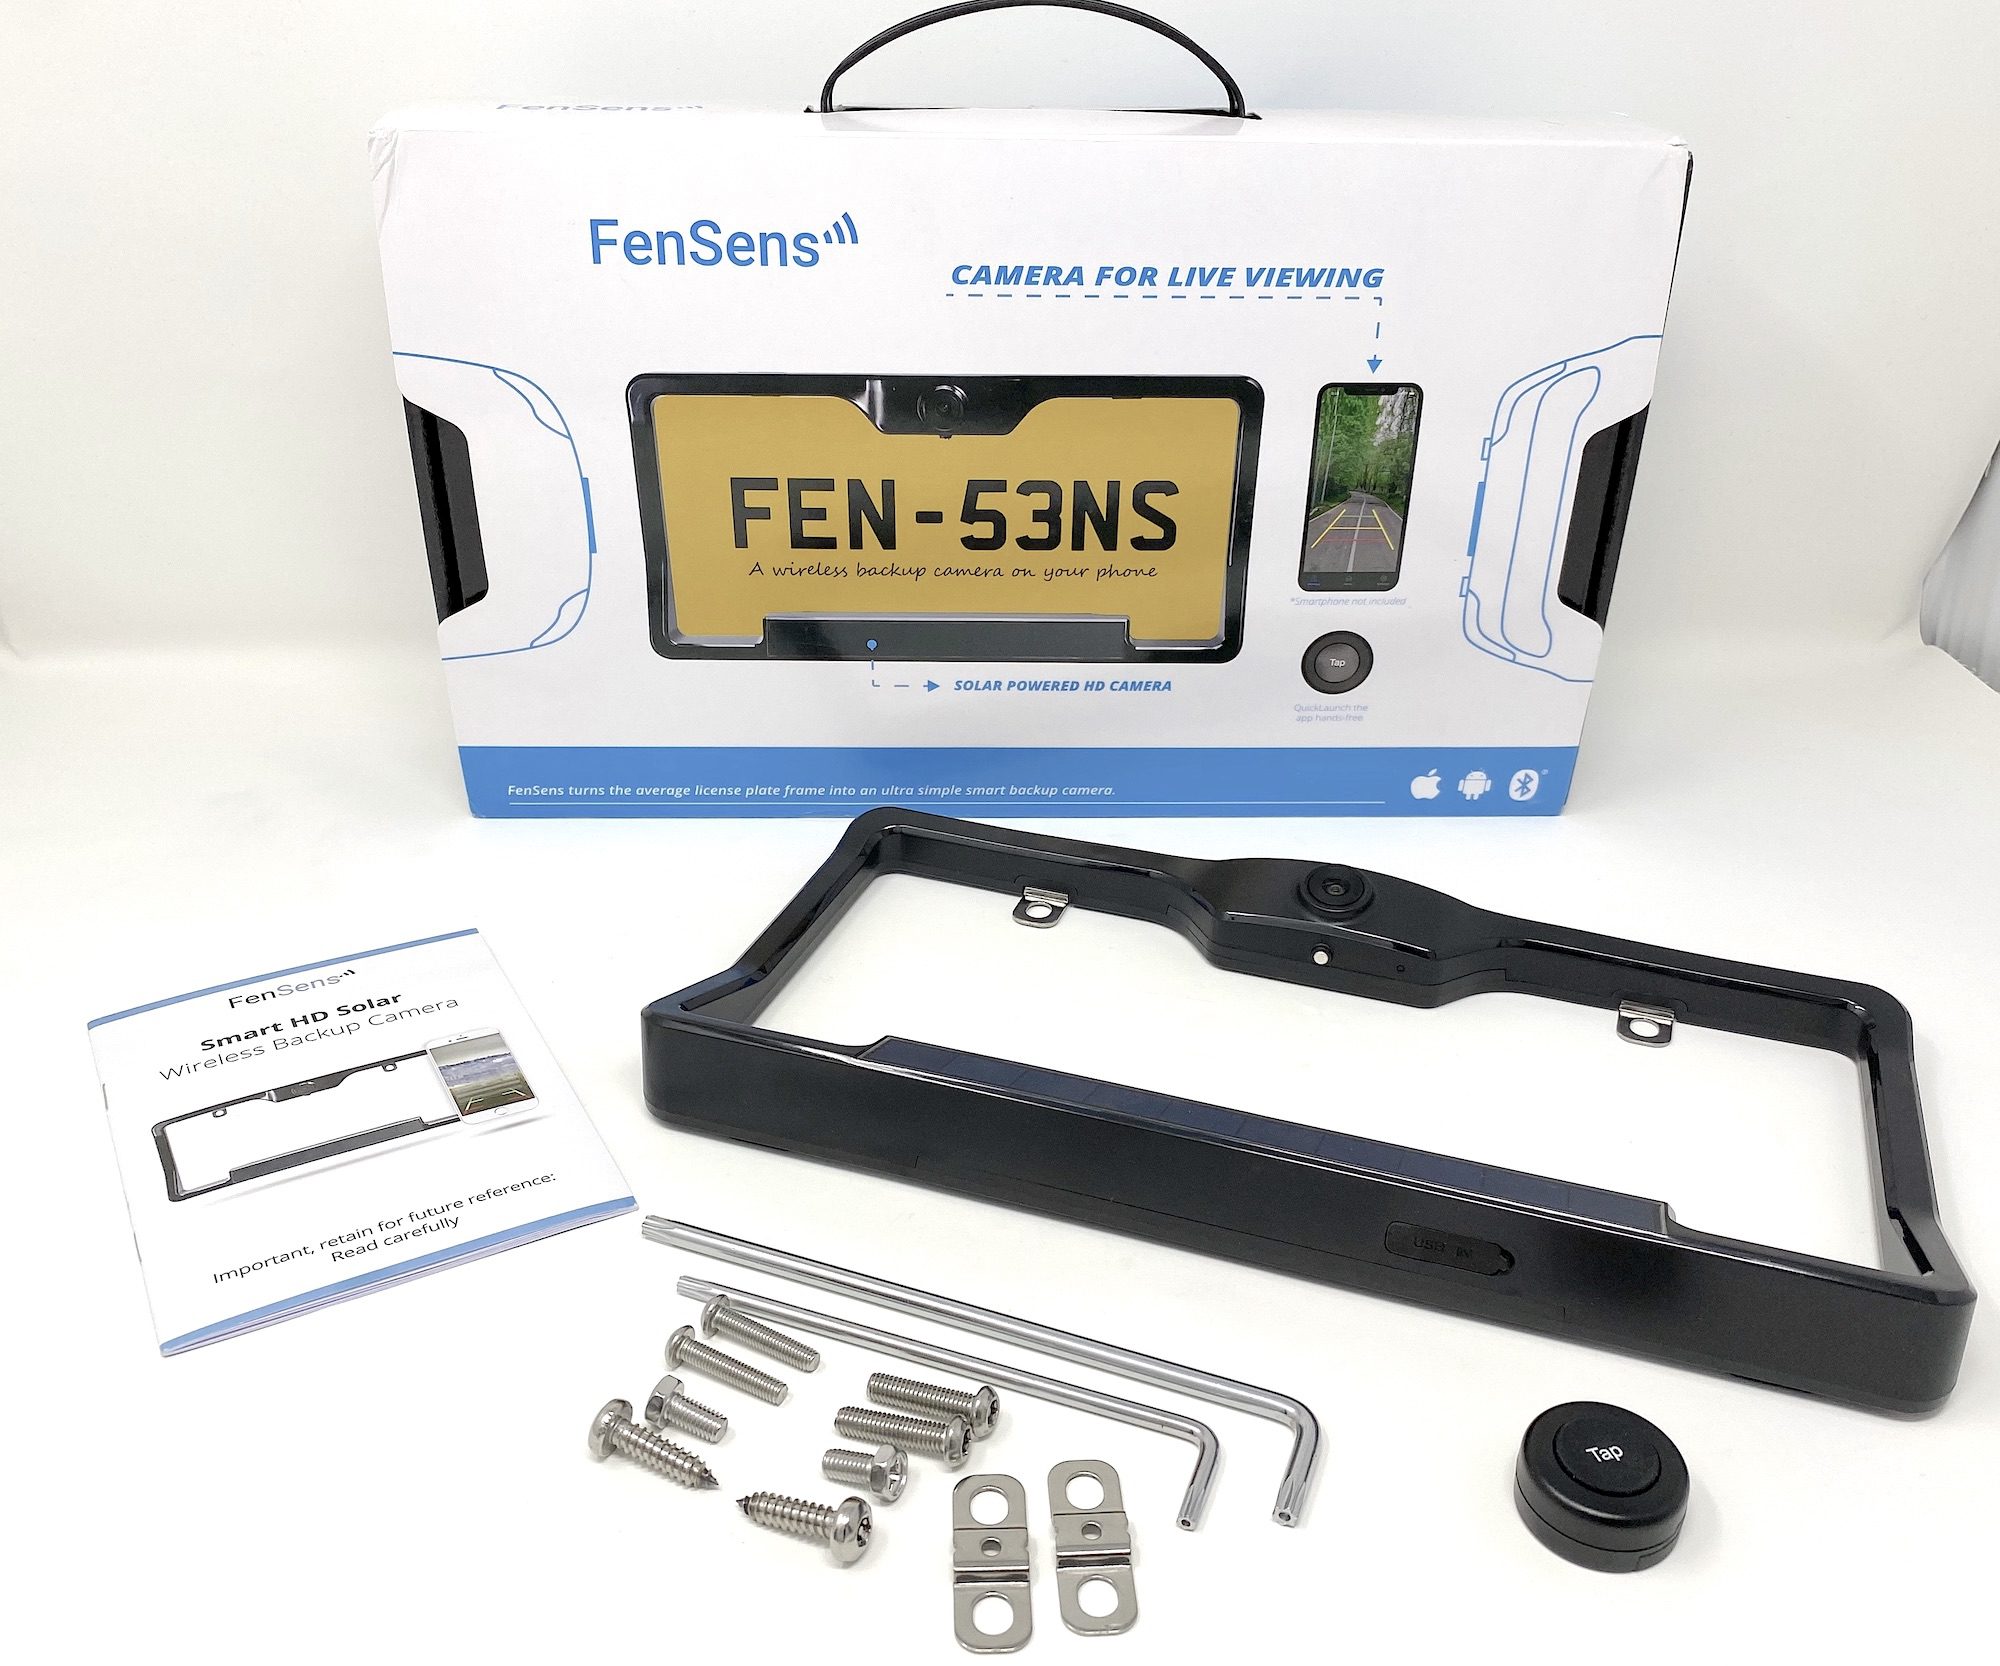 FenSens Wireless Backup Camera